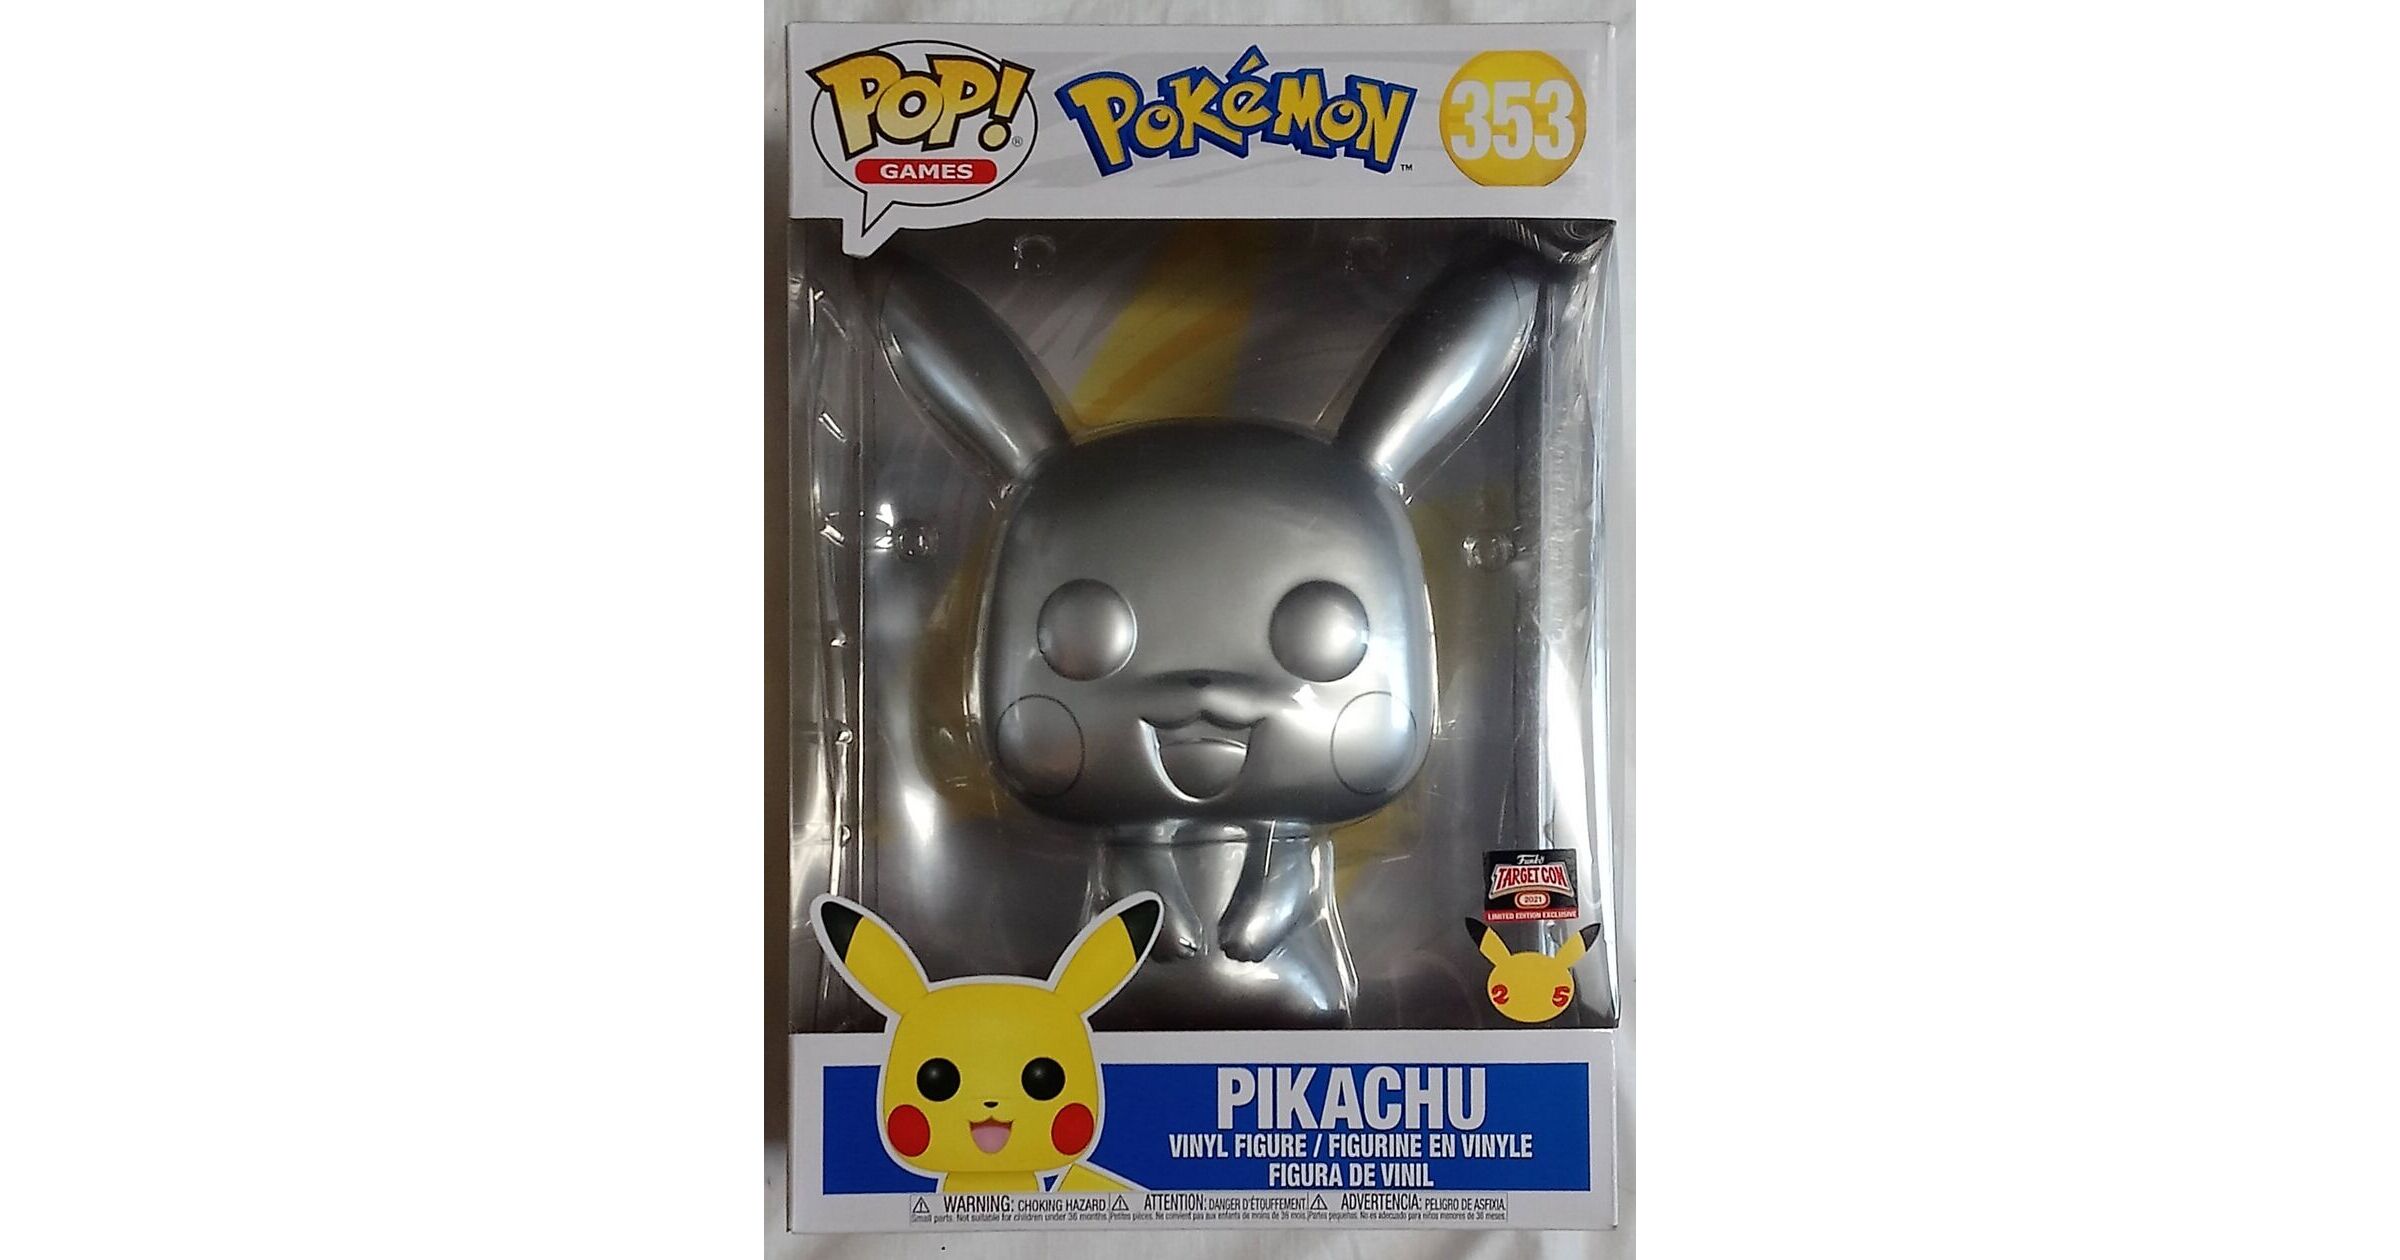 Funko Pop! Games Pokemon Pikachu (Metallic) Target Con Exclusive (10 Inch)  Figure #353 - US